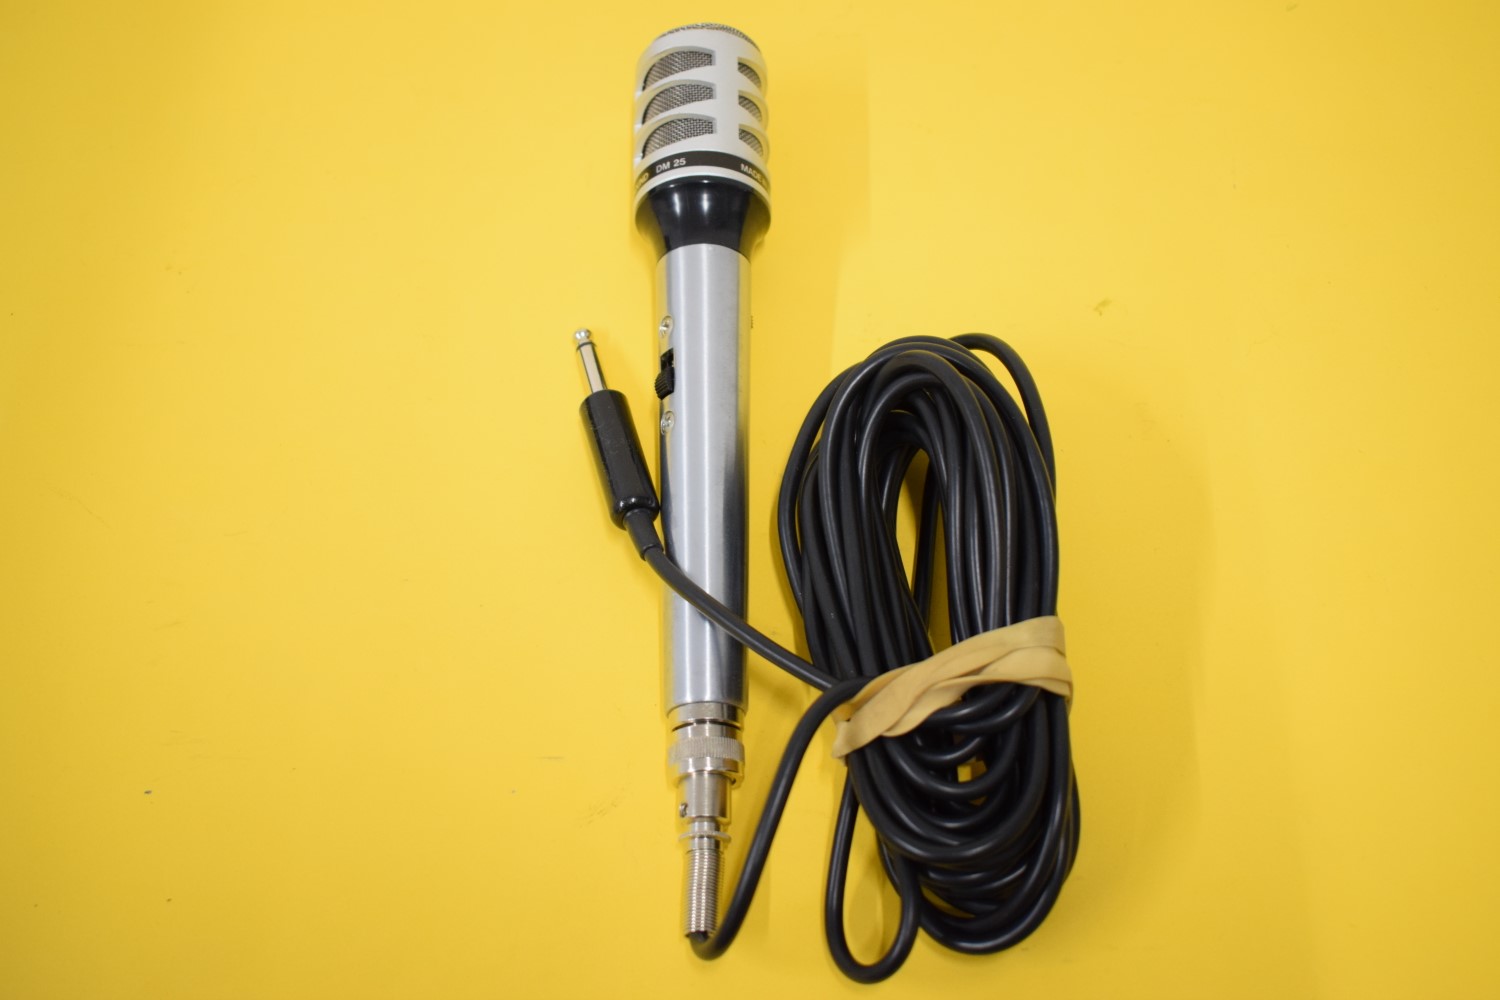 Prinzsound DM 25 Microfoon – Originele Verpakking